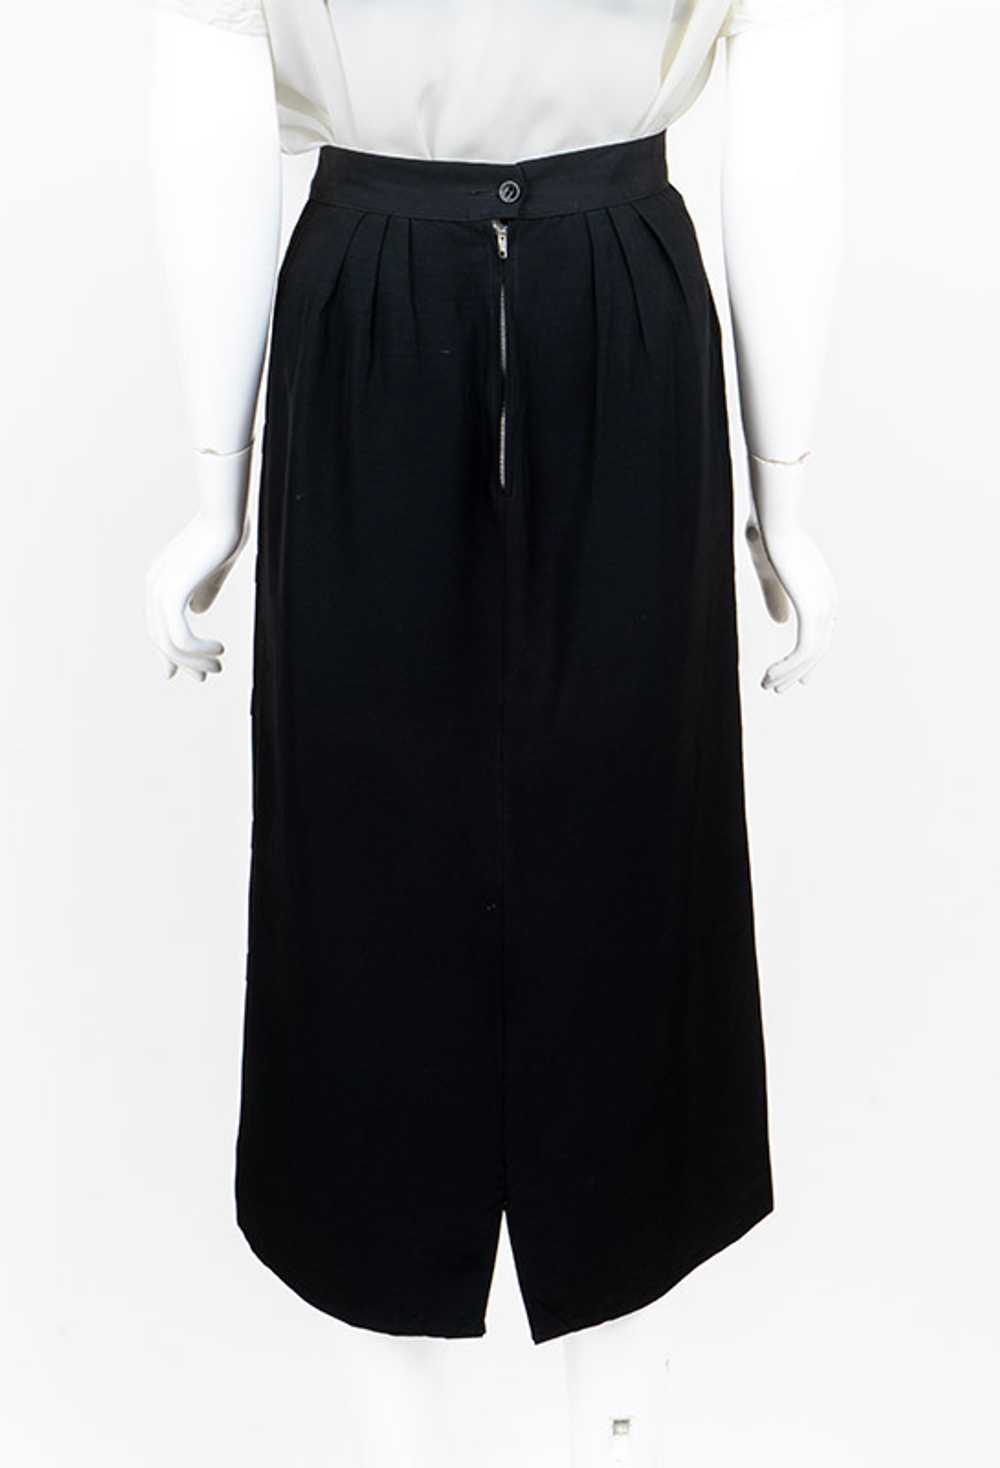 1950s Black Satin Pencil Skirt w/ Tiered Pleats - image 4